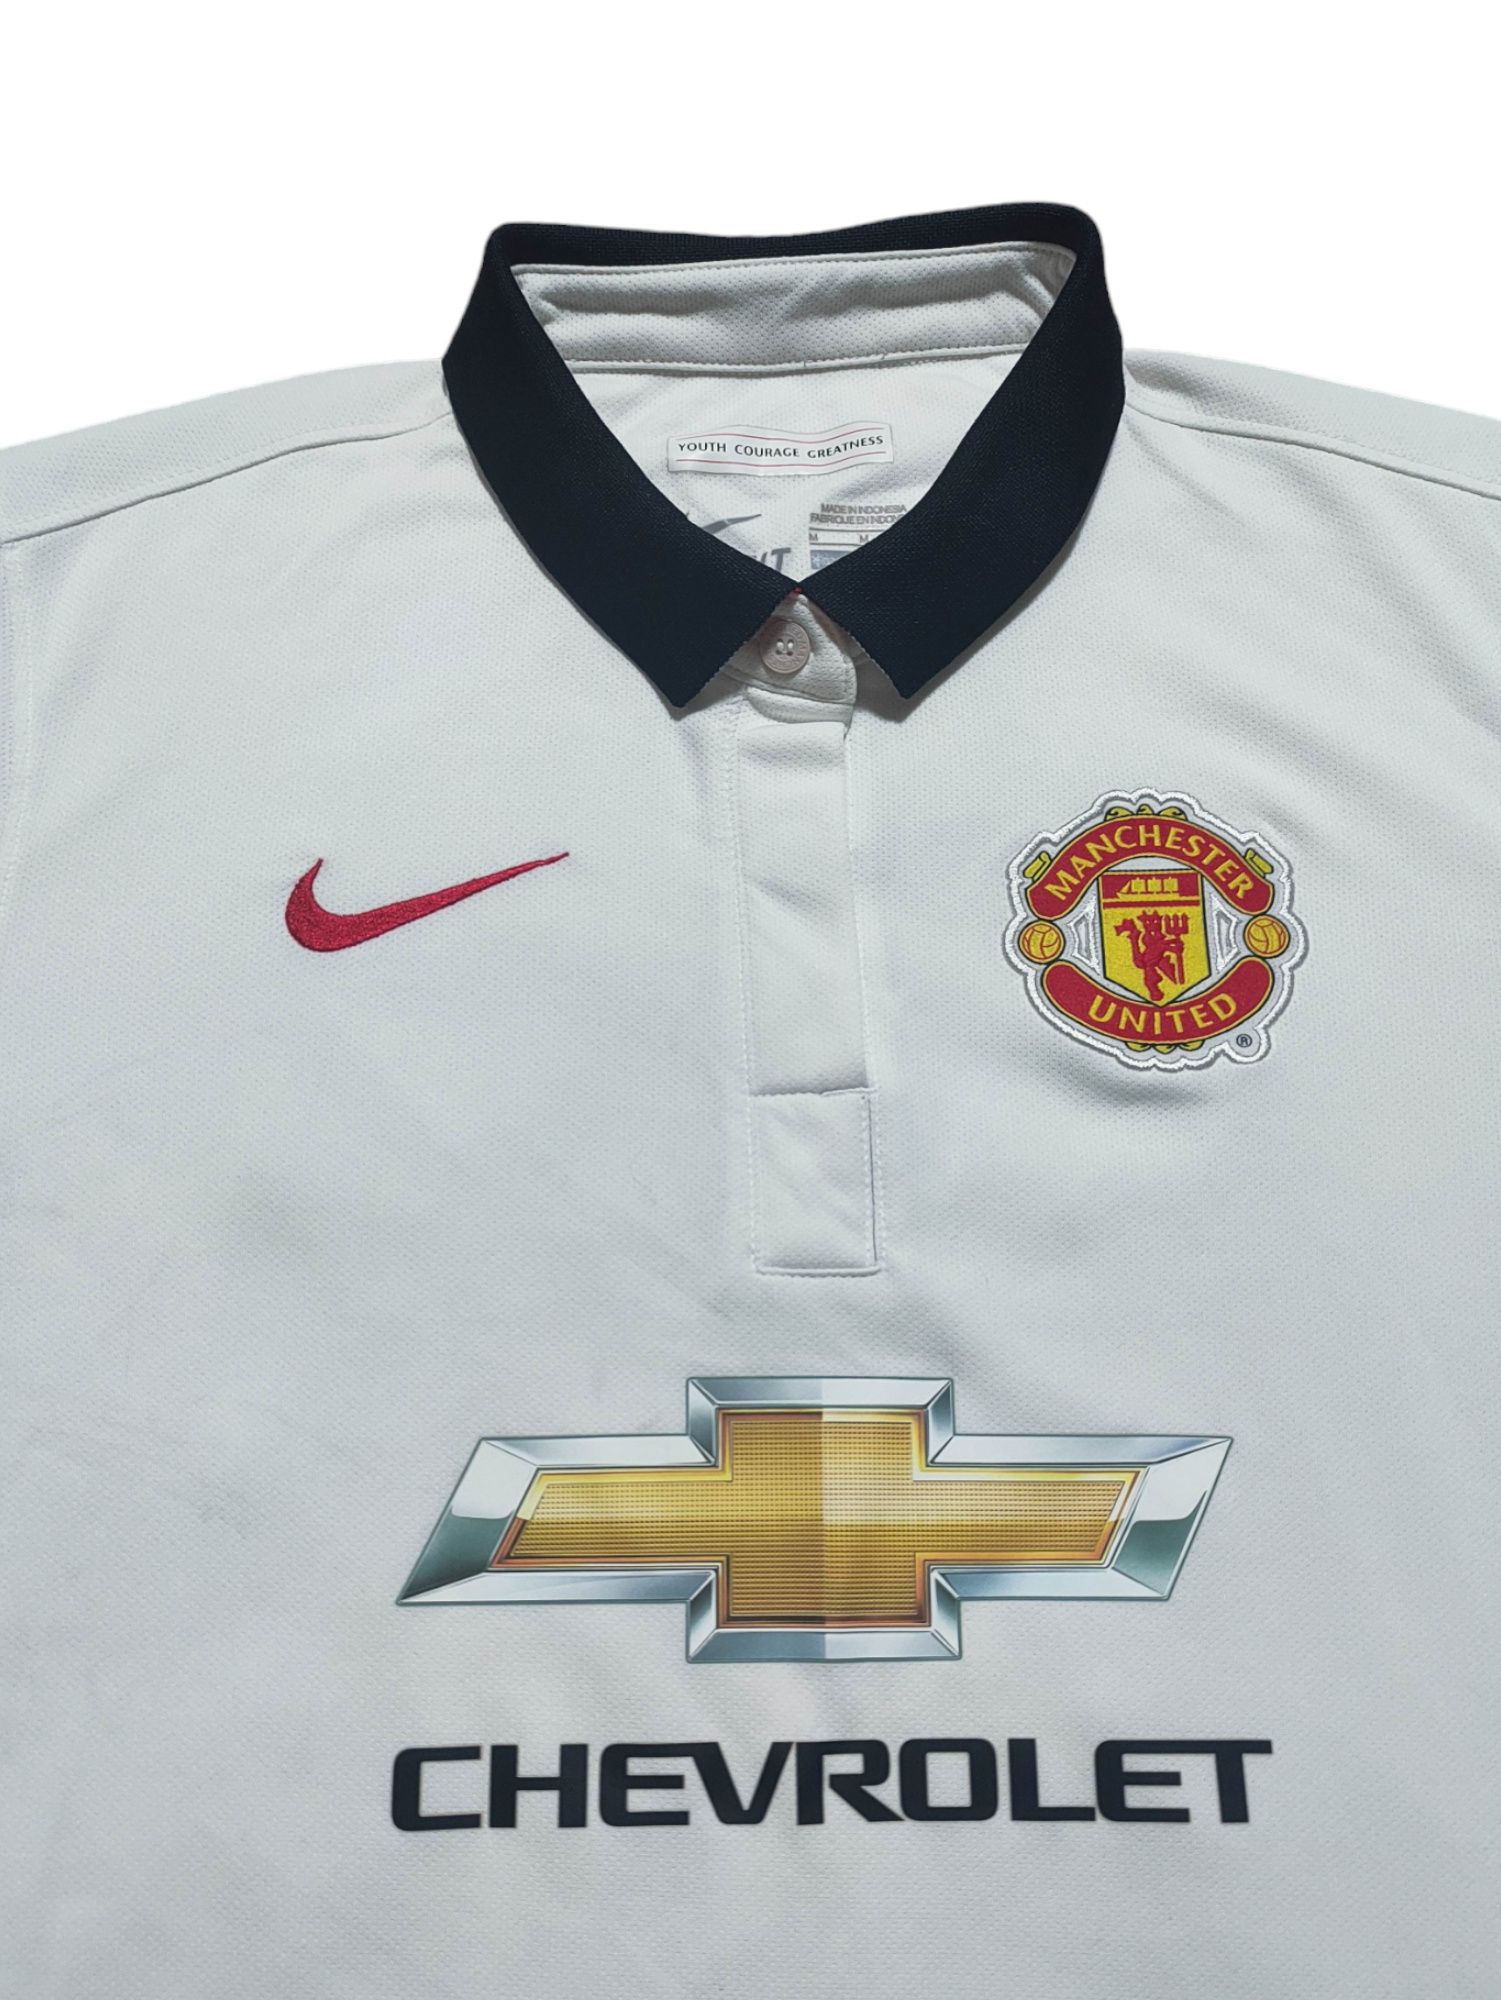 Футболка Nike Manchester United 2014/2015 v. Persie originals оригинал